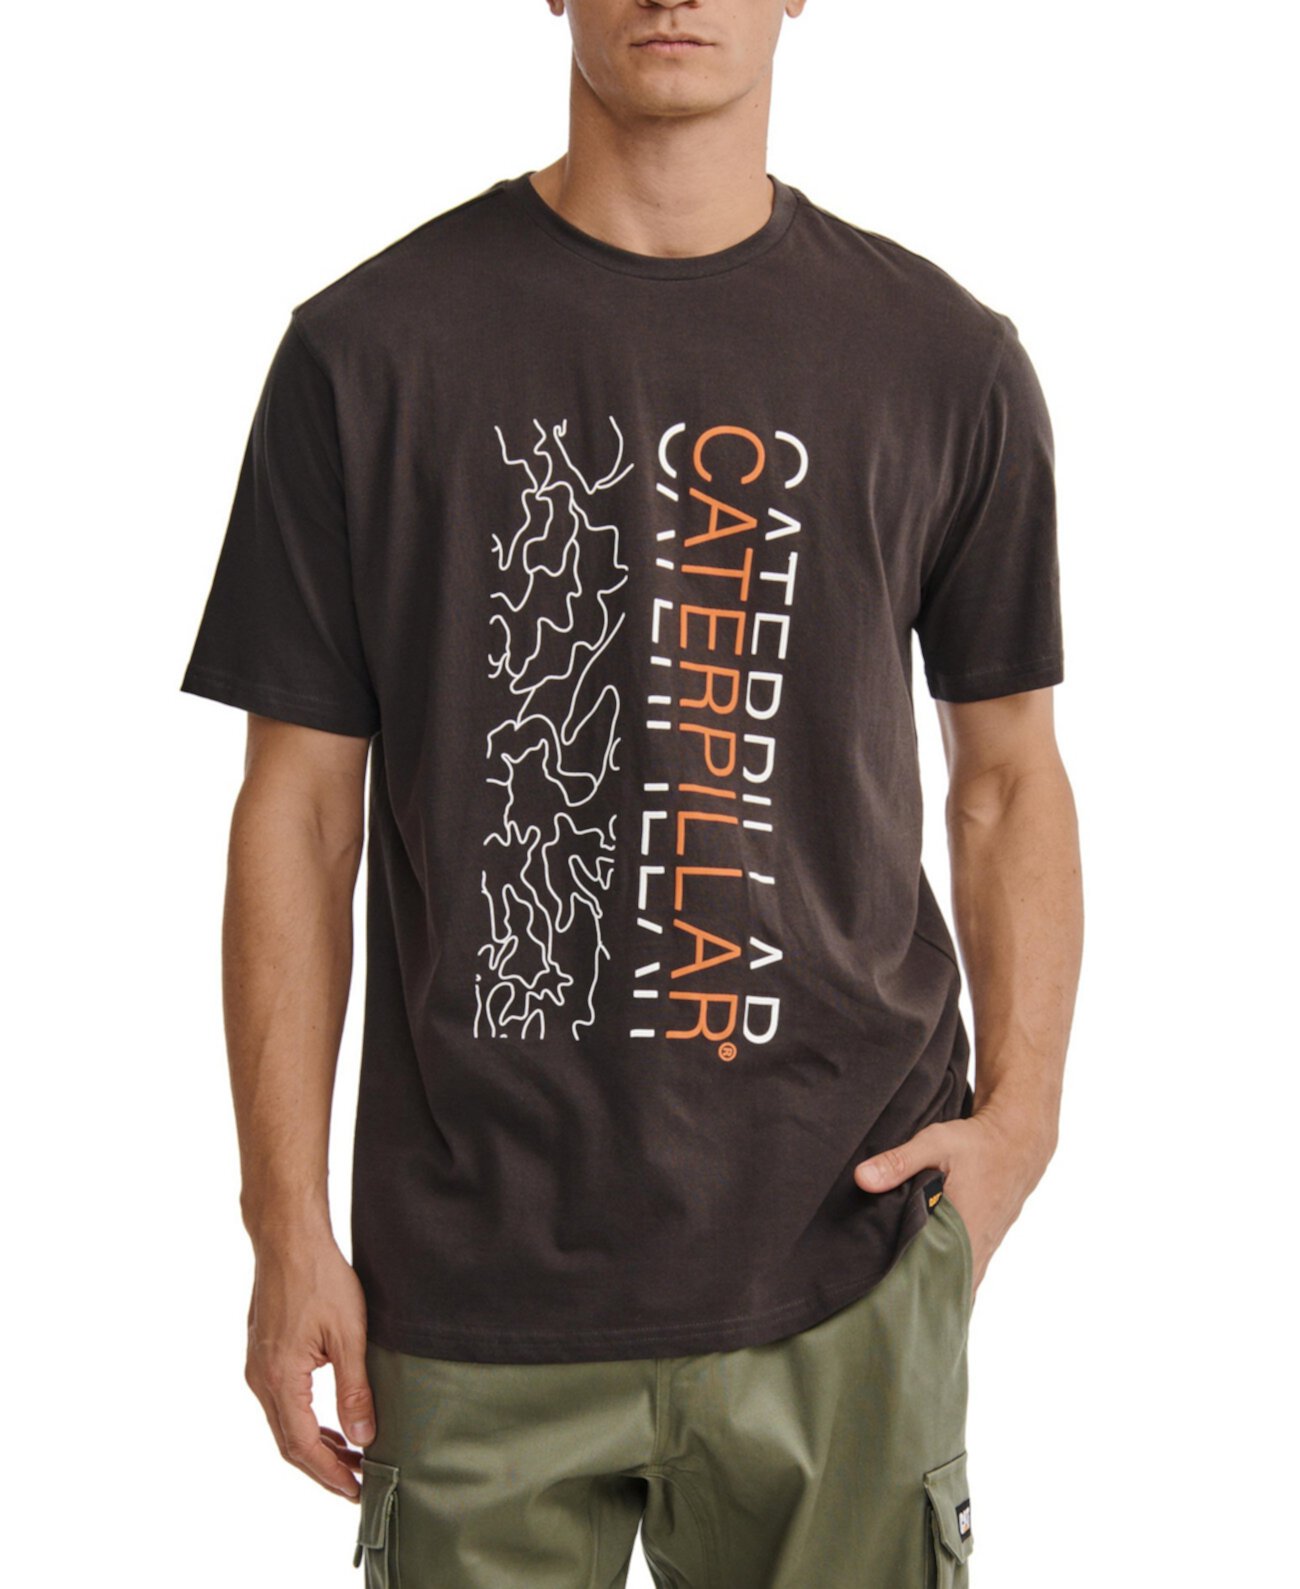 Men's Urban Camo Graphic T-shirt Caterpillar